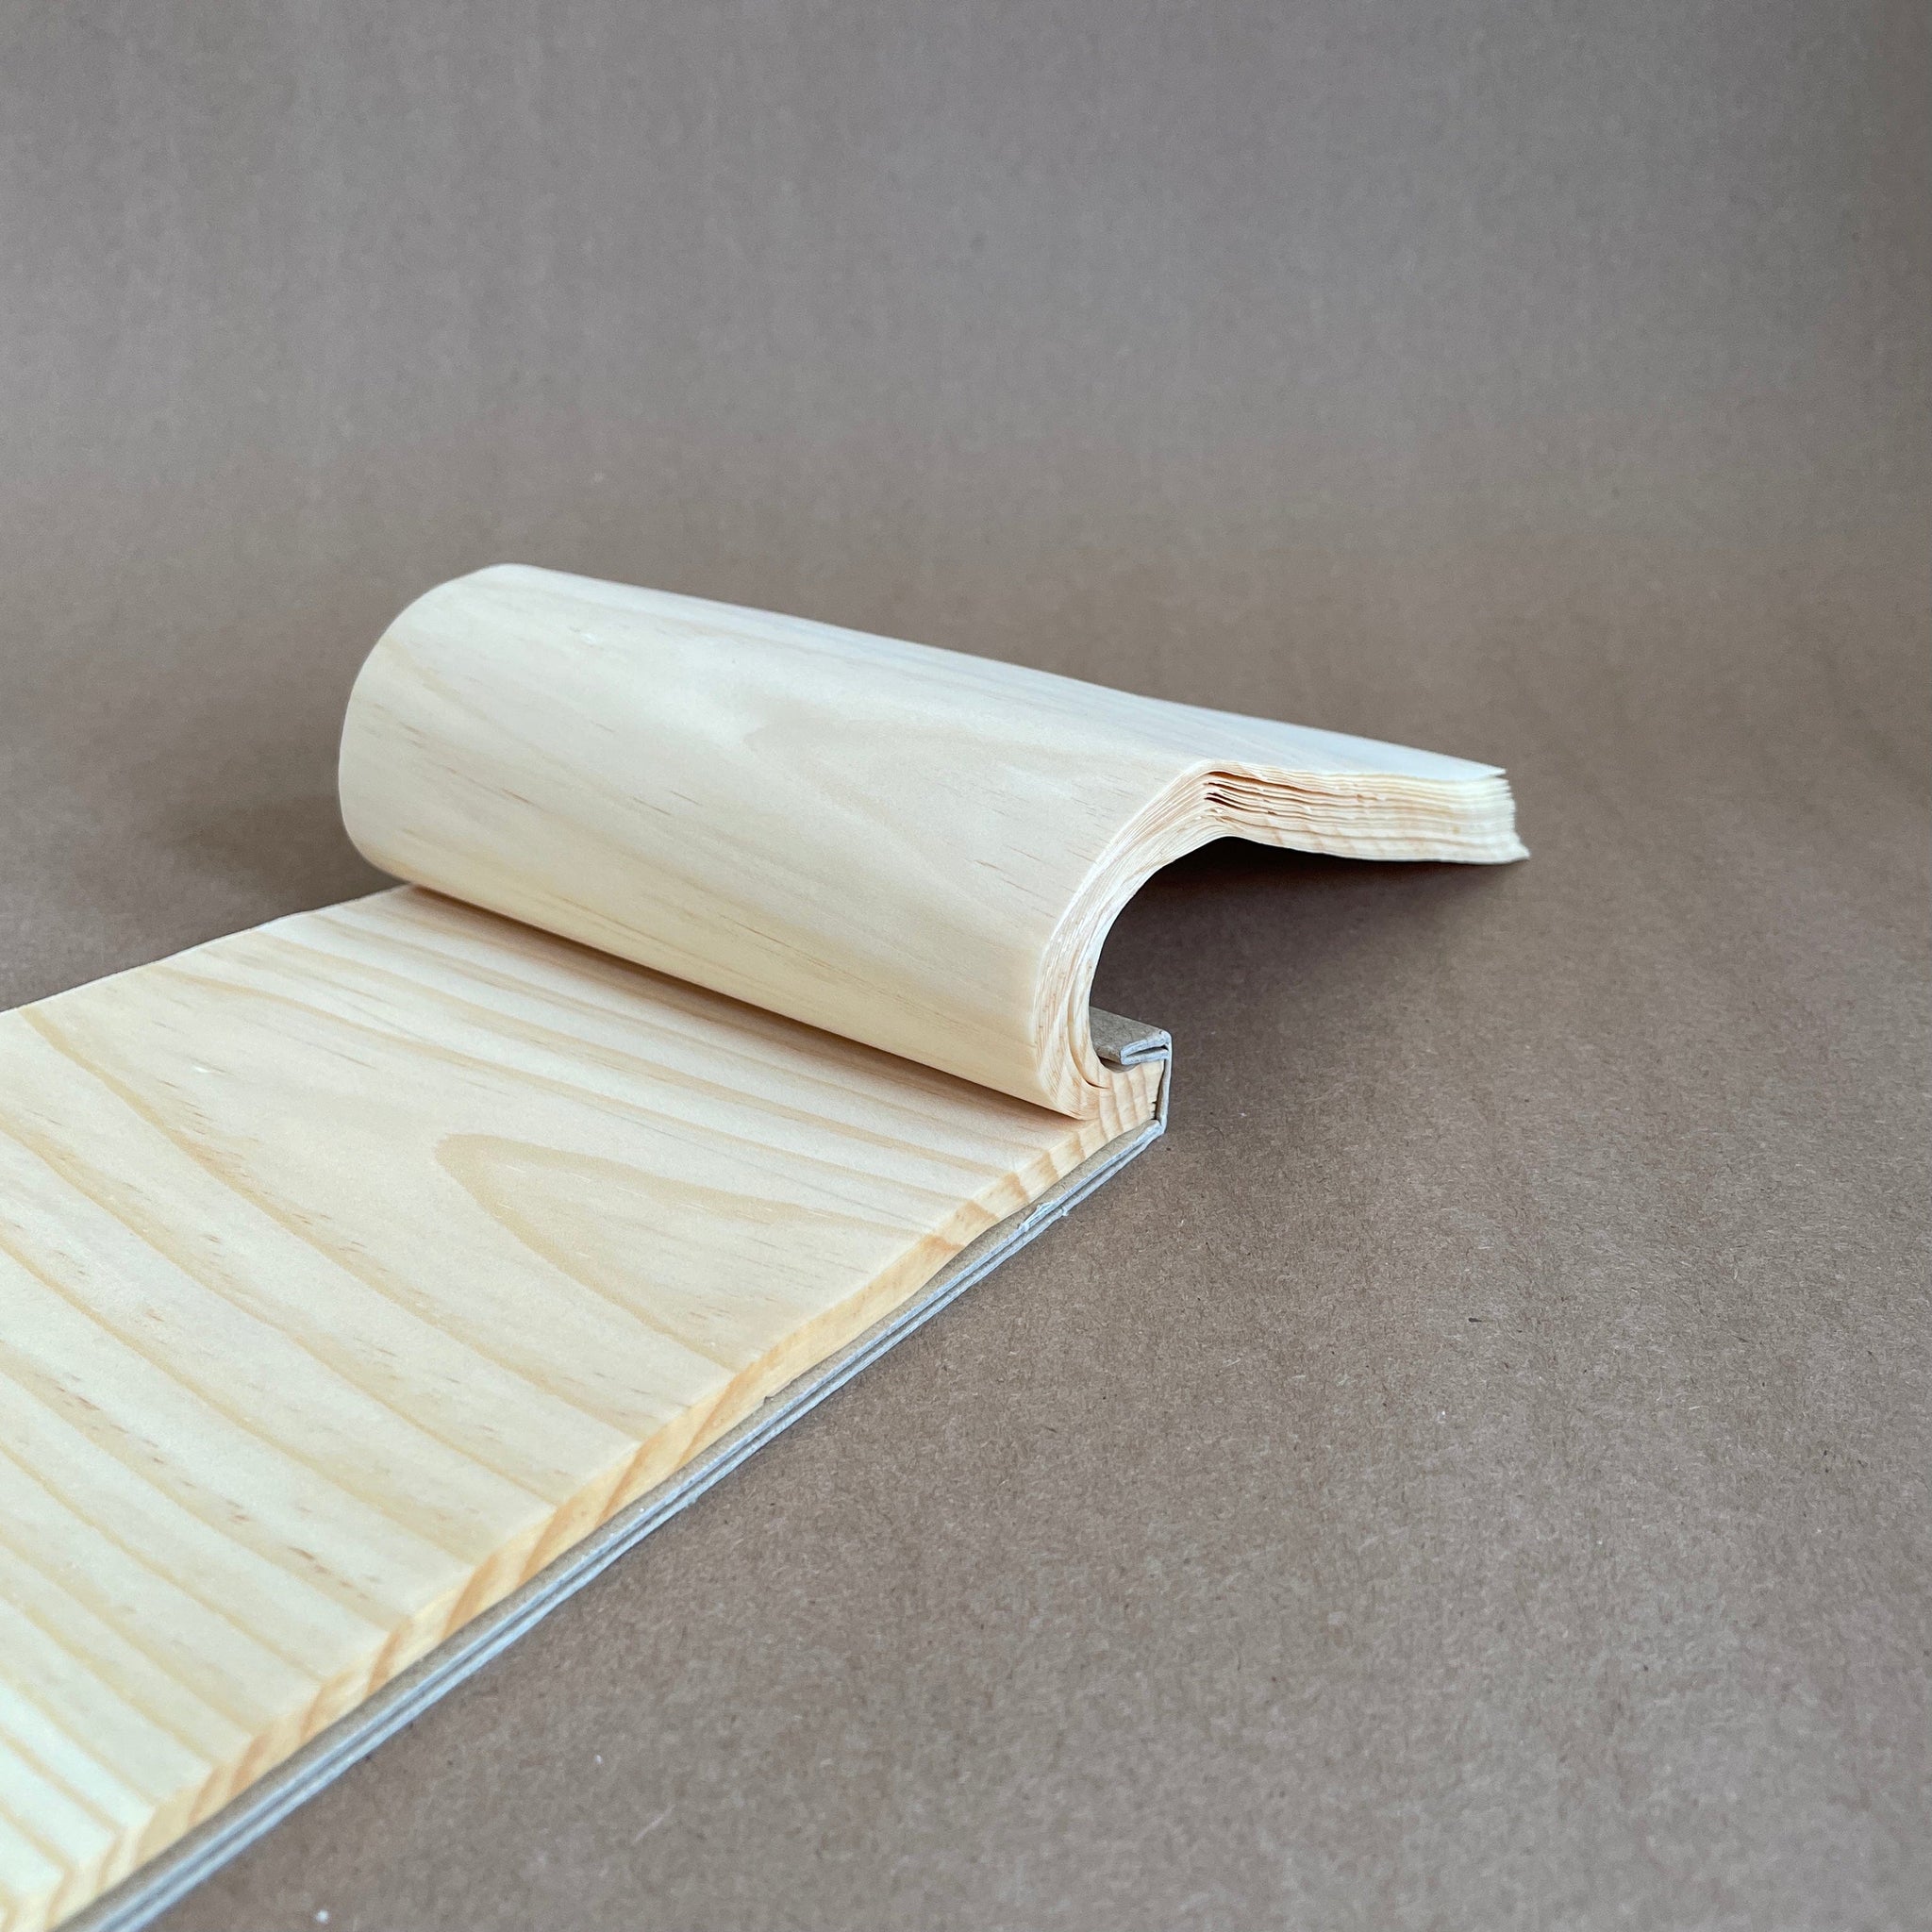 Morihata Stationery Kizara Wood Sheet Memo Pad